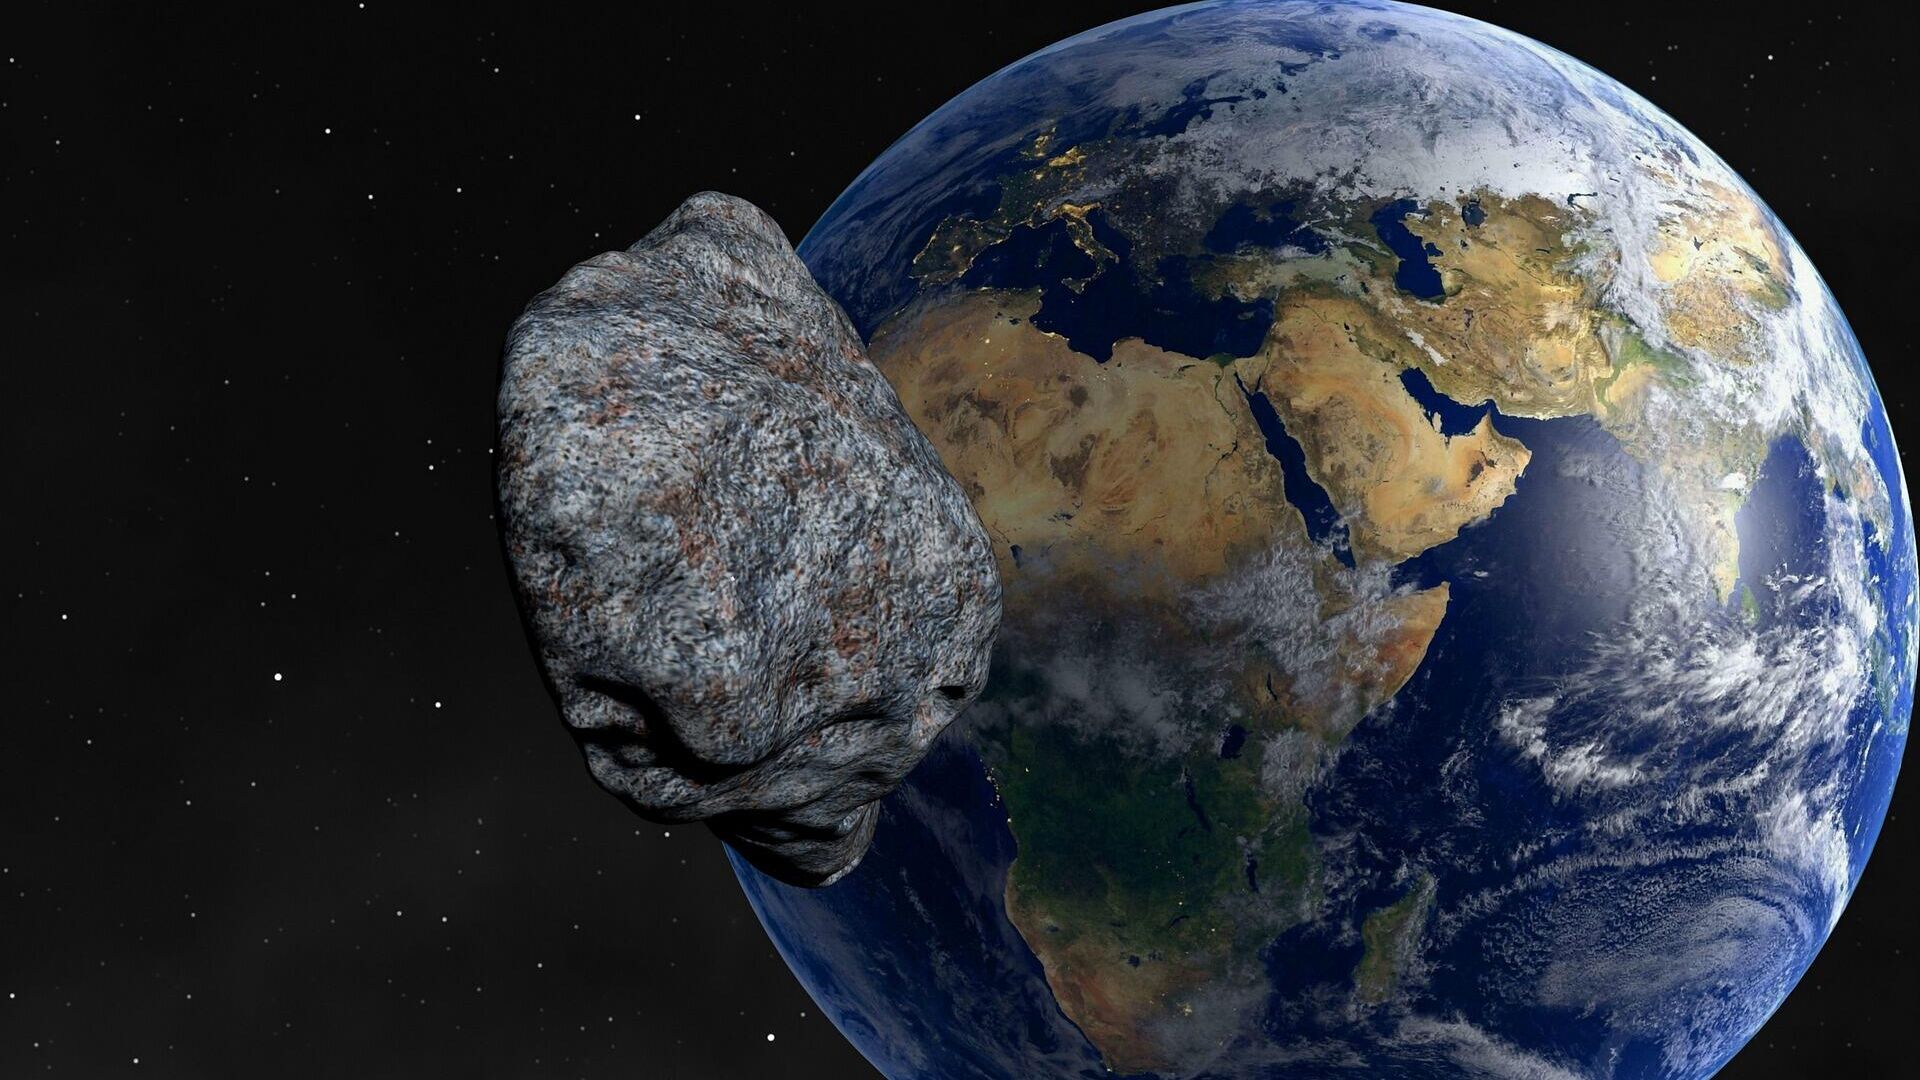 Asteroide (imagem de referência) - Sputnik Brasil, 1920, 13.12.2021